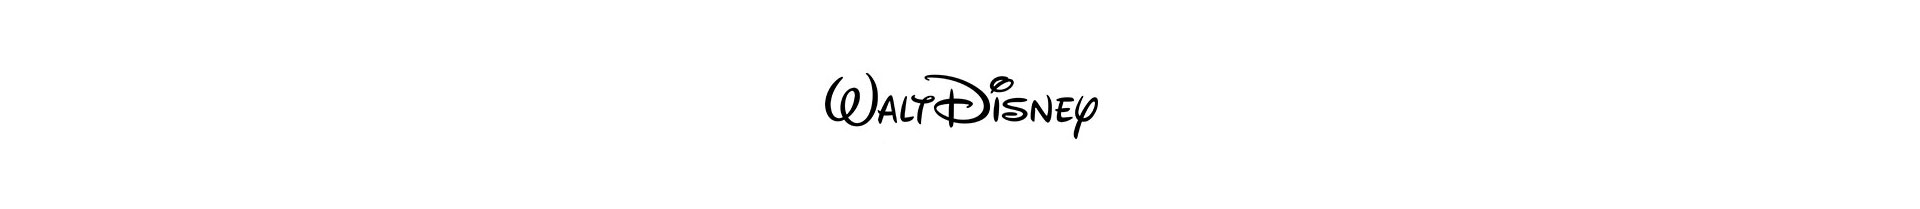 Il logotipo Walt Disney